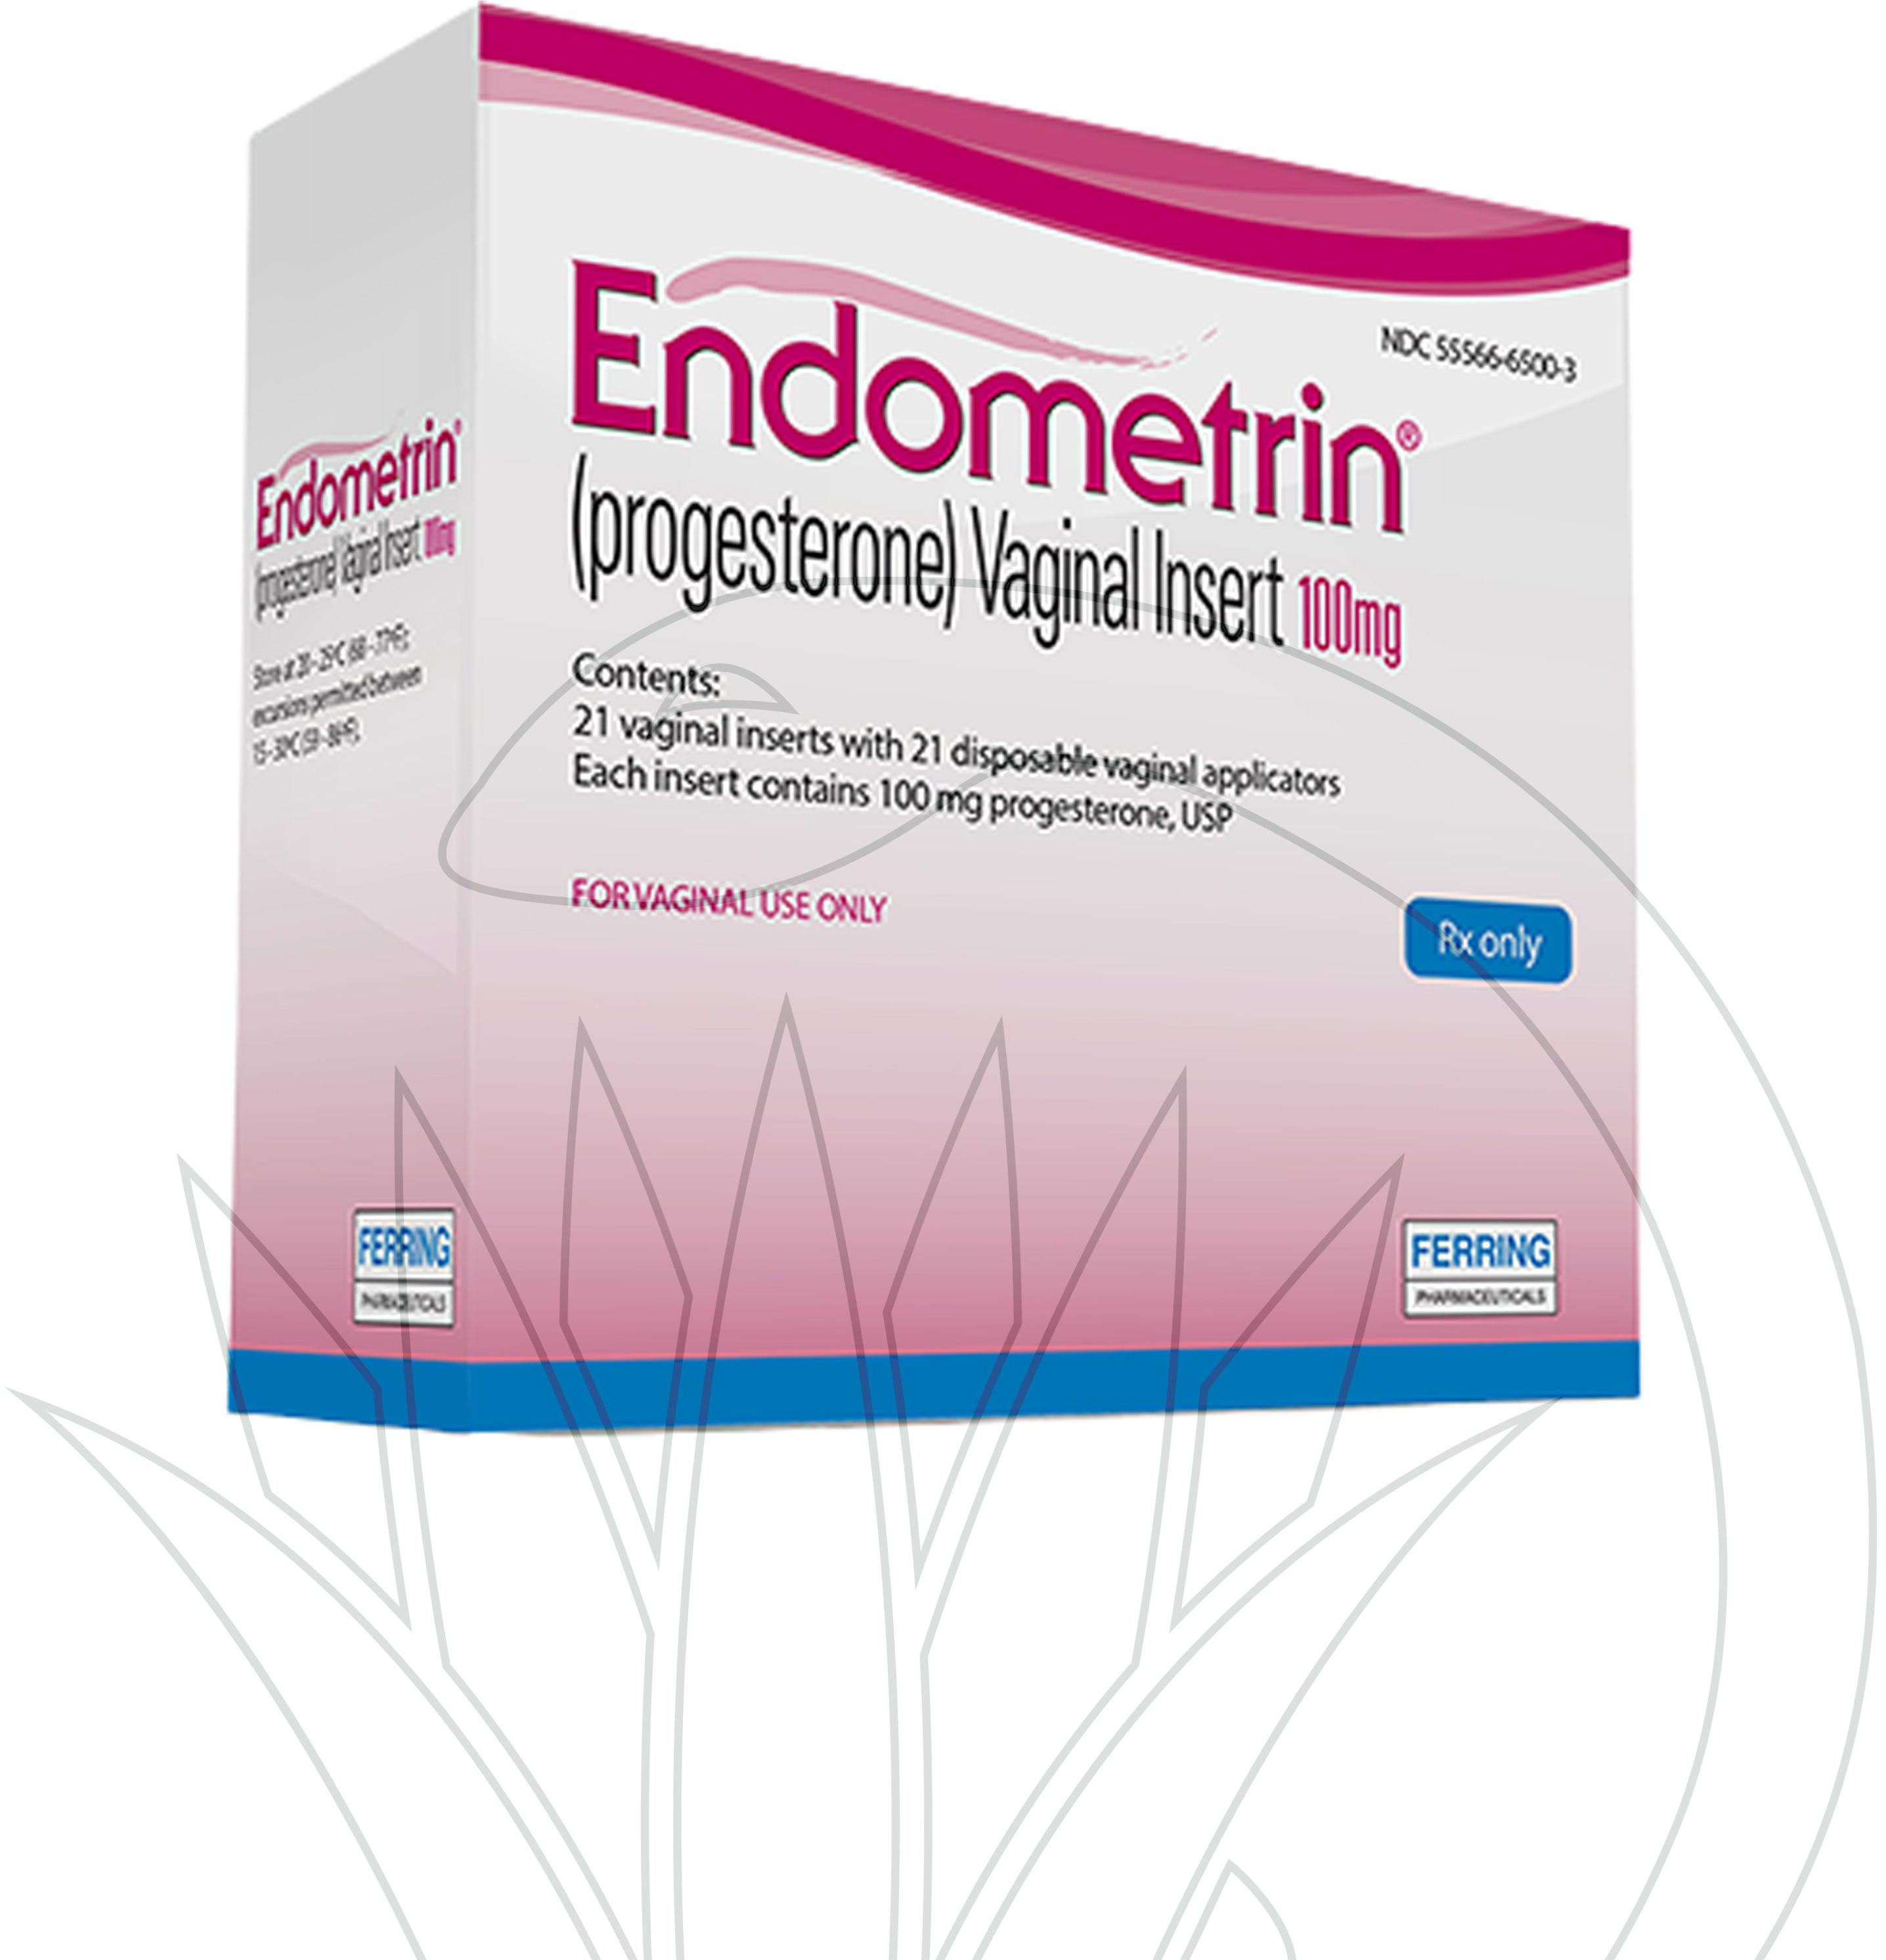 Endometrin Mail In Rebate